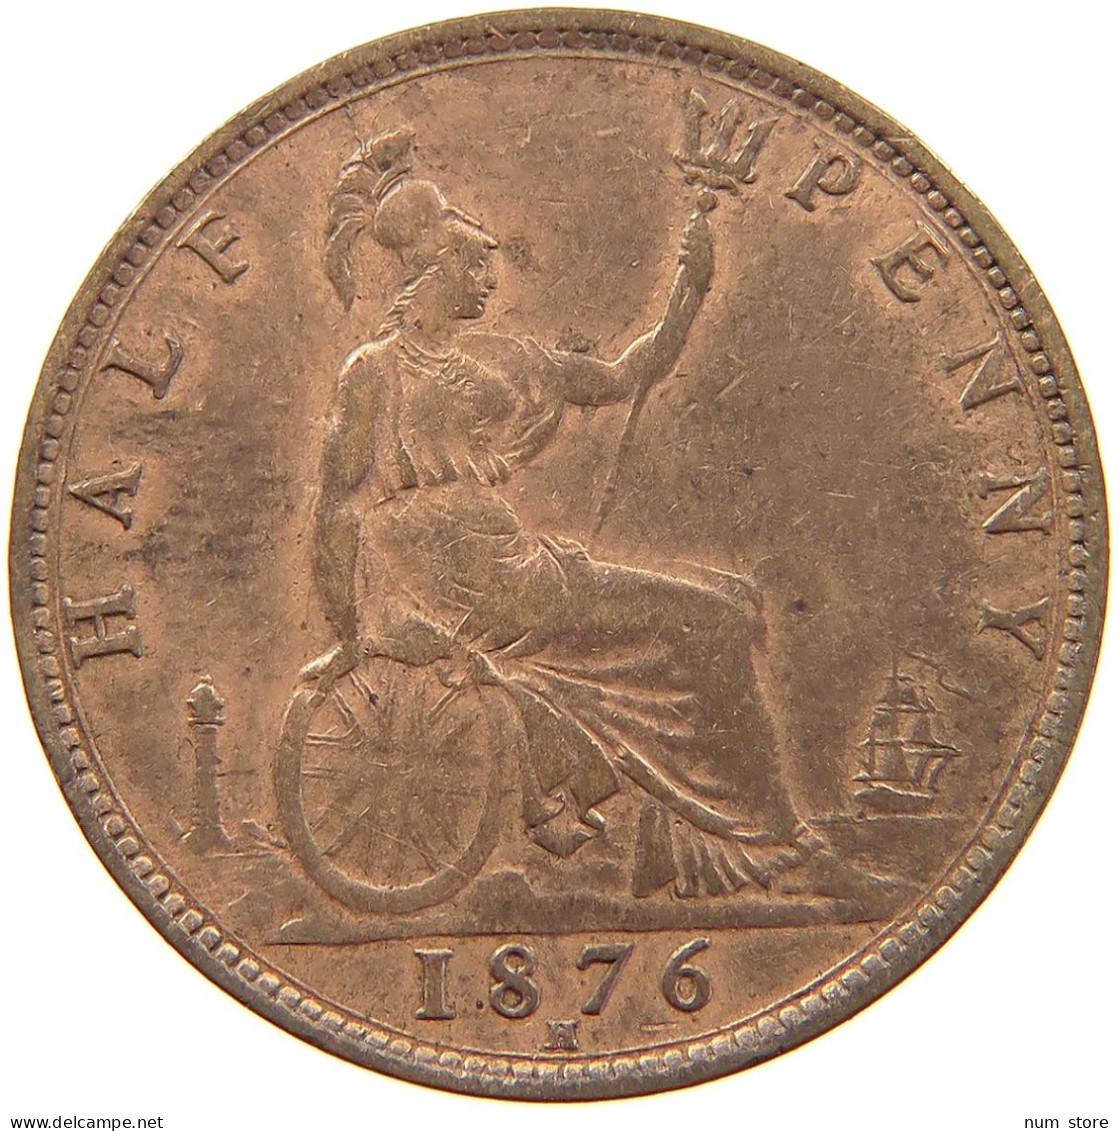 GREAT BRITAIN HALFPENNY 1876 H Victoria 1837-1901 #s021 0319 - C. 1/2 Penny